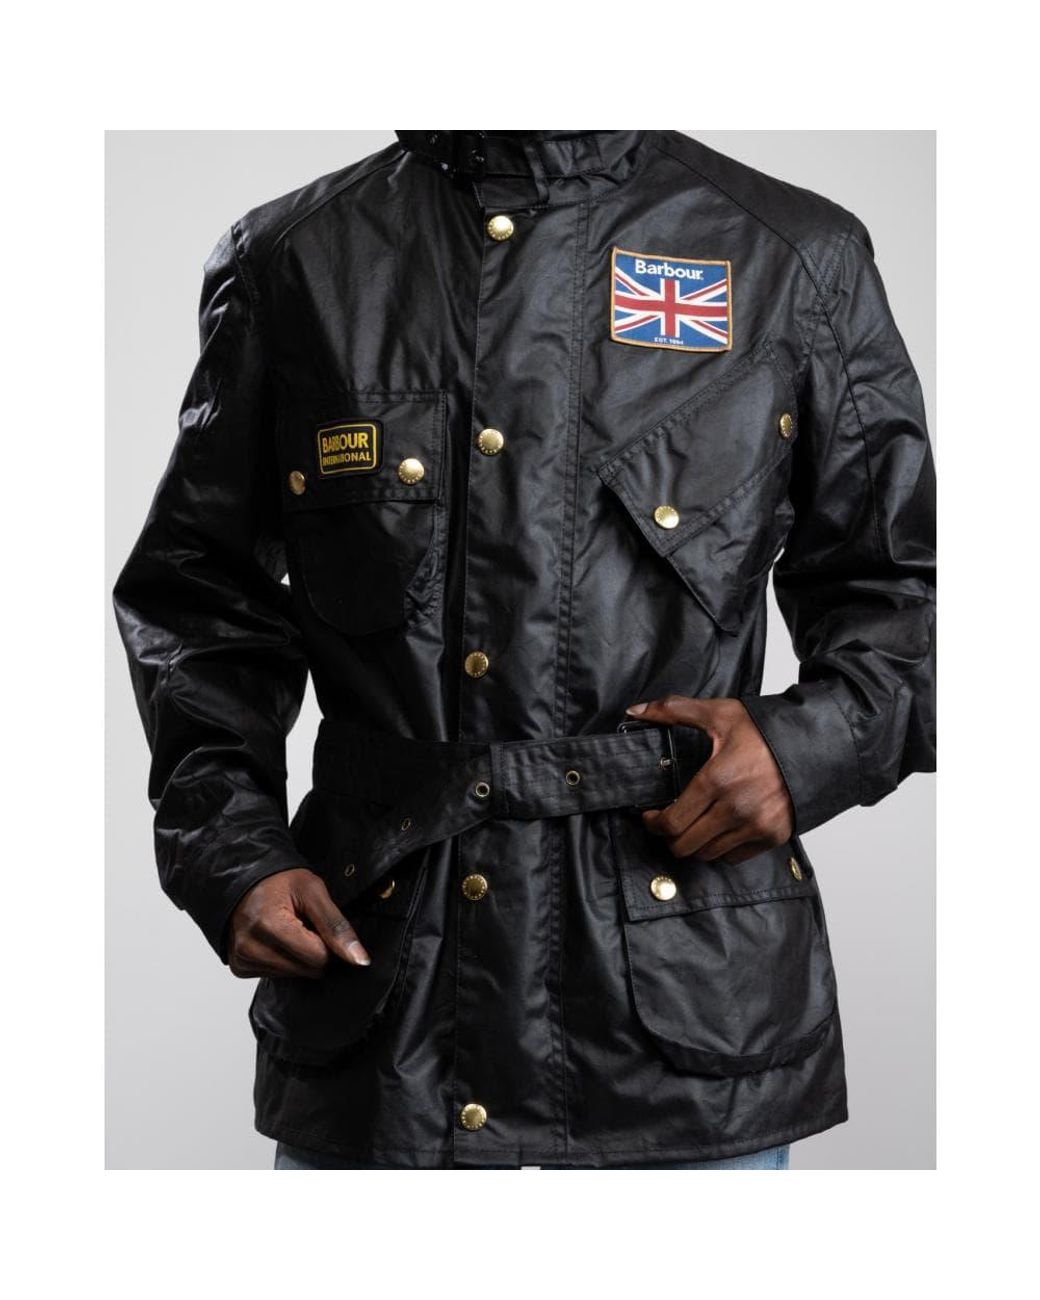 Barbour Cotton Union Jack International Wax Jacket in Black for Men | Lyst